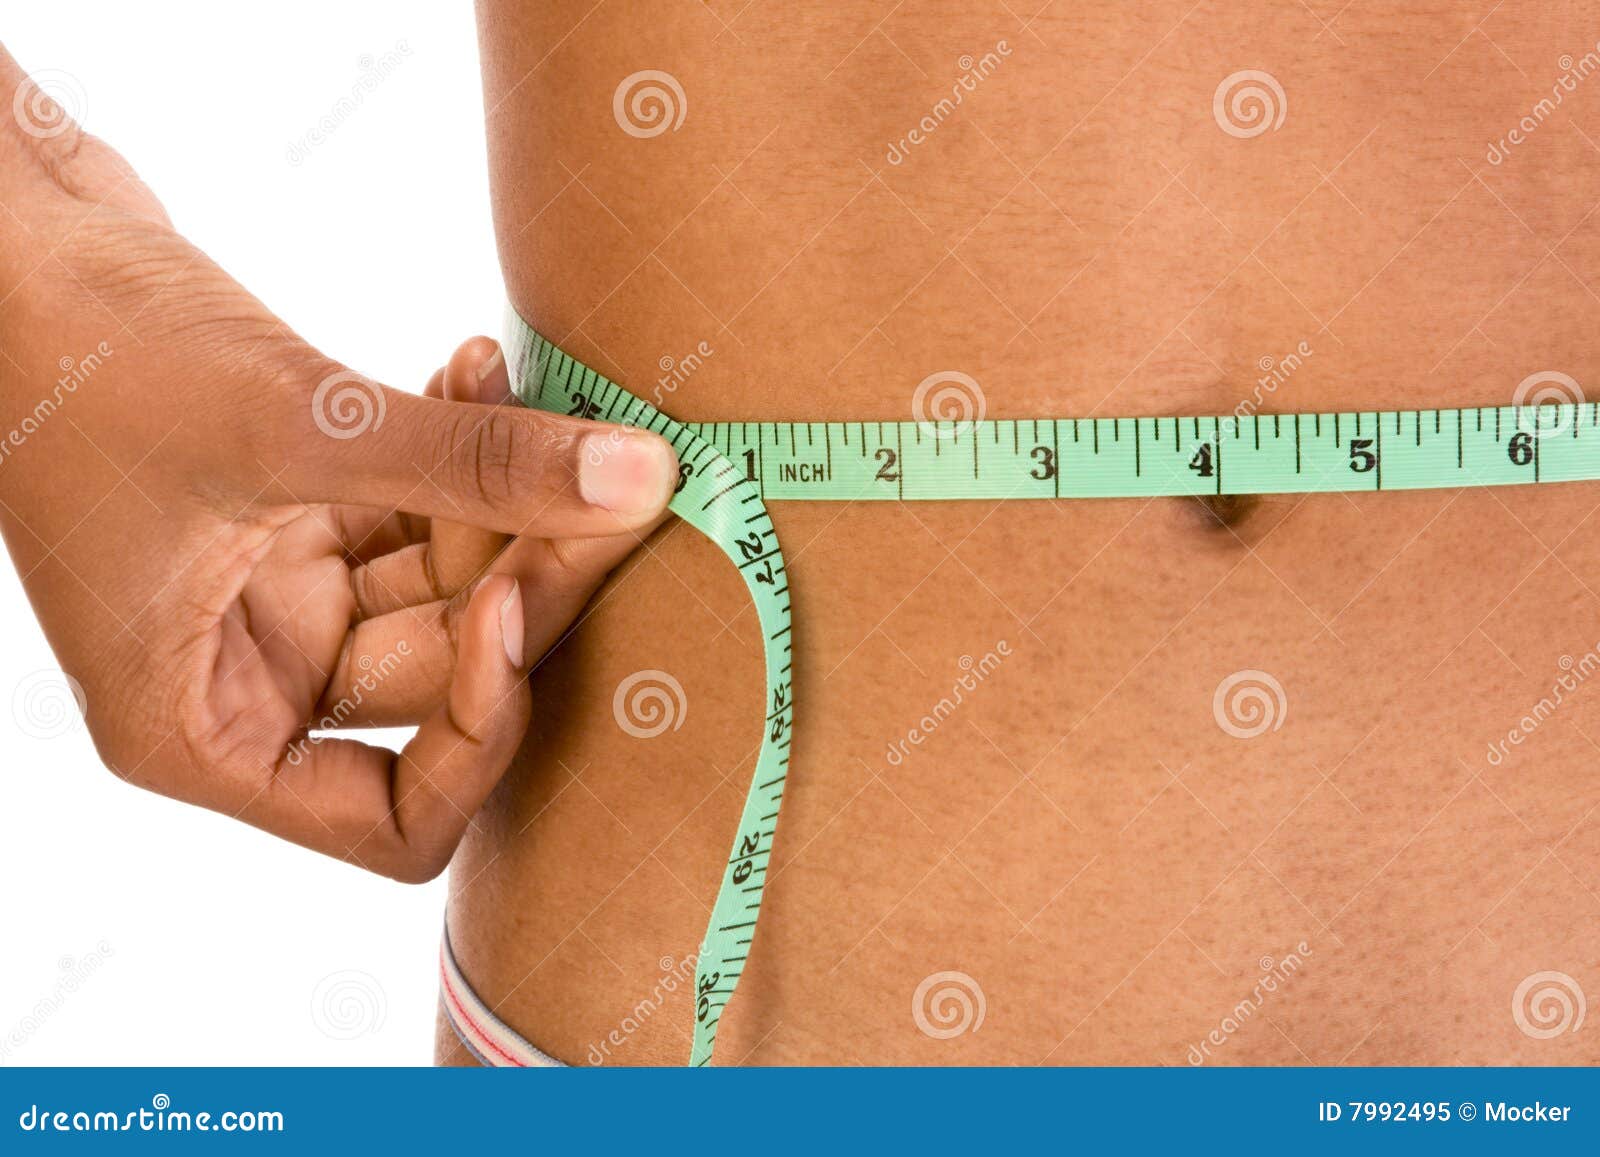 measuring waist, close up of ethnic woman abdomen